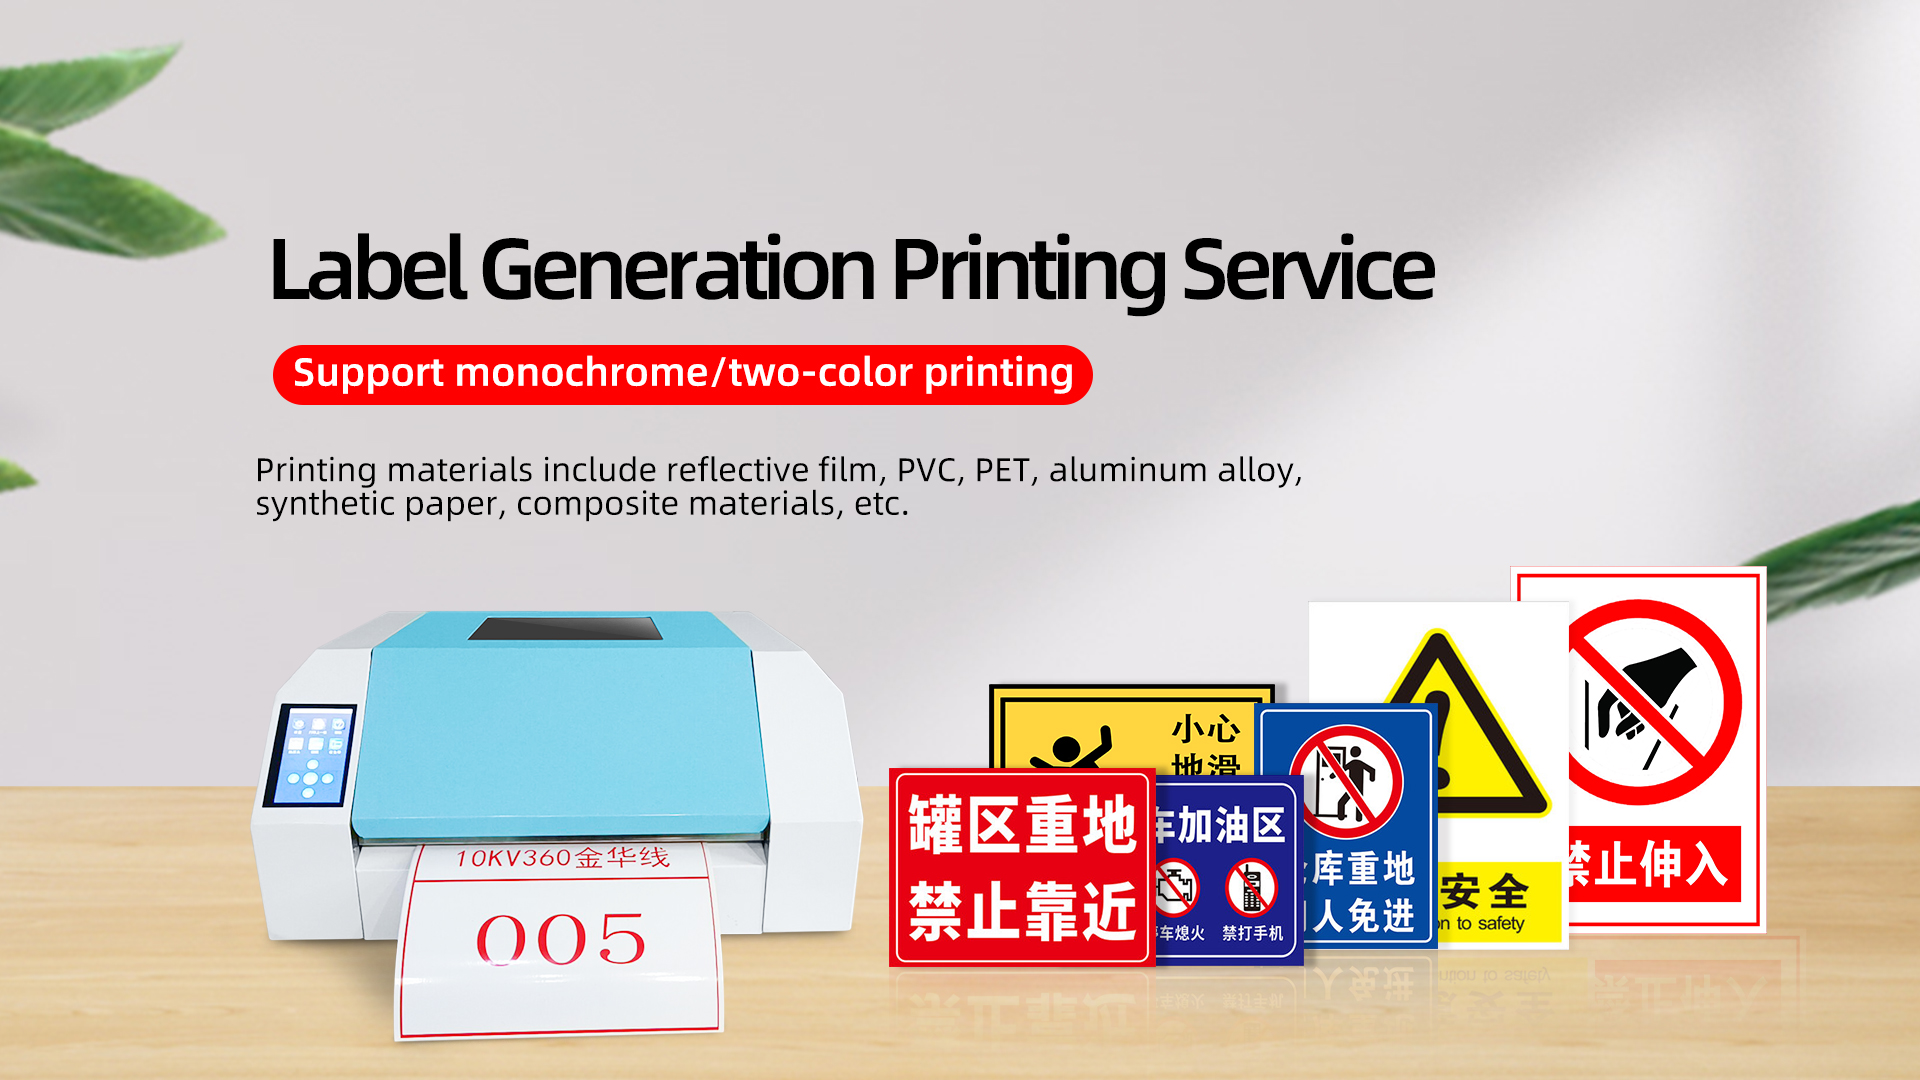 Label Generation Printing Service